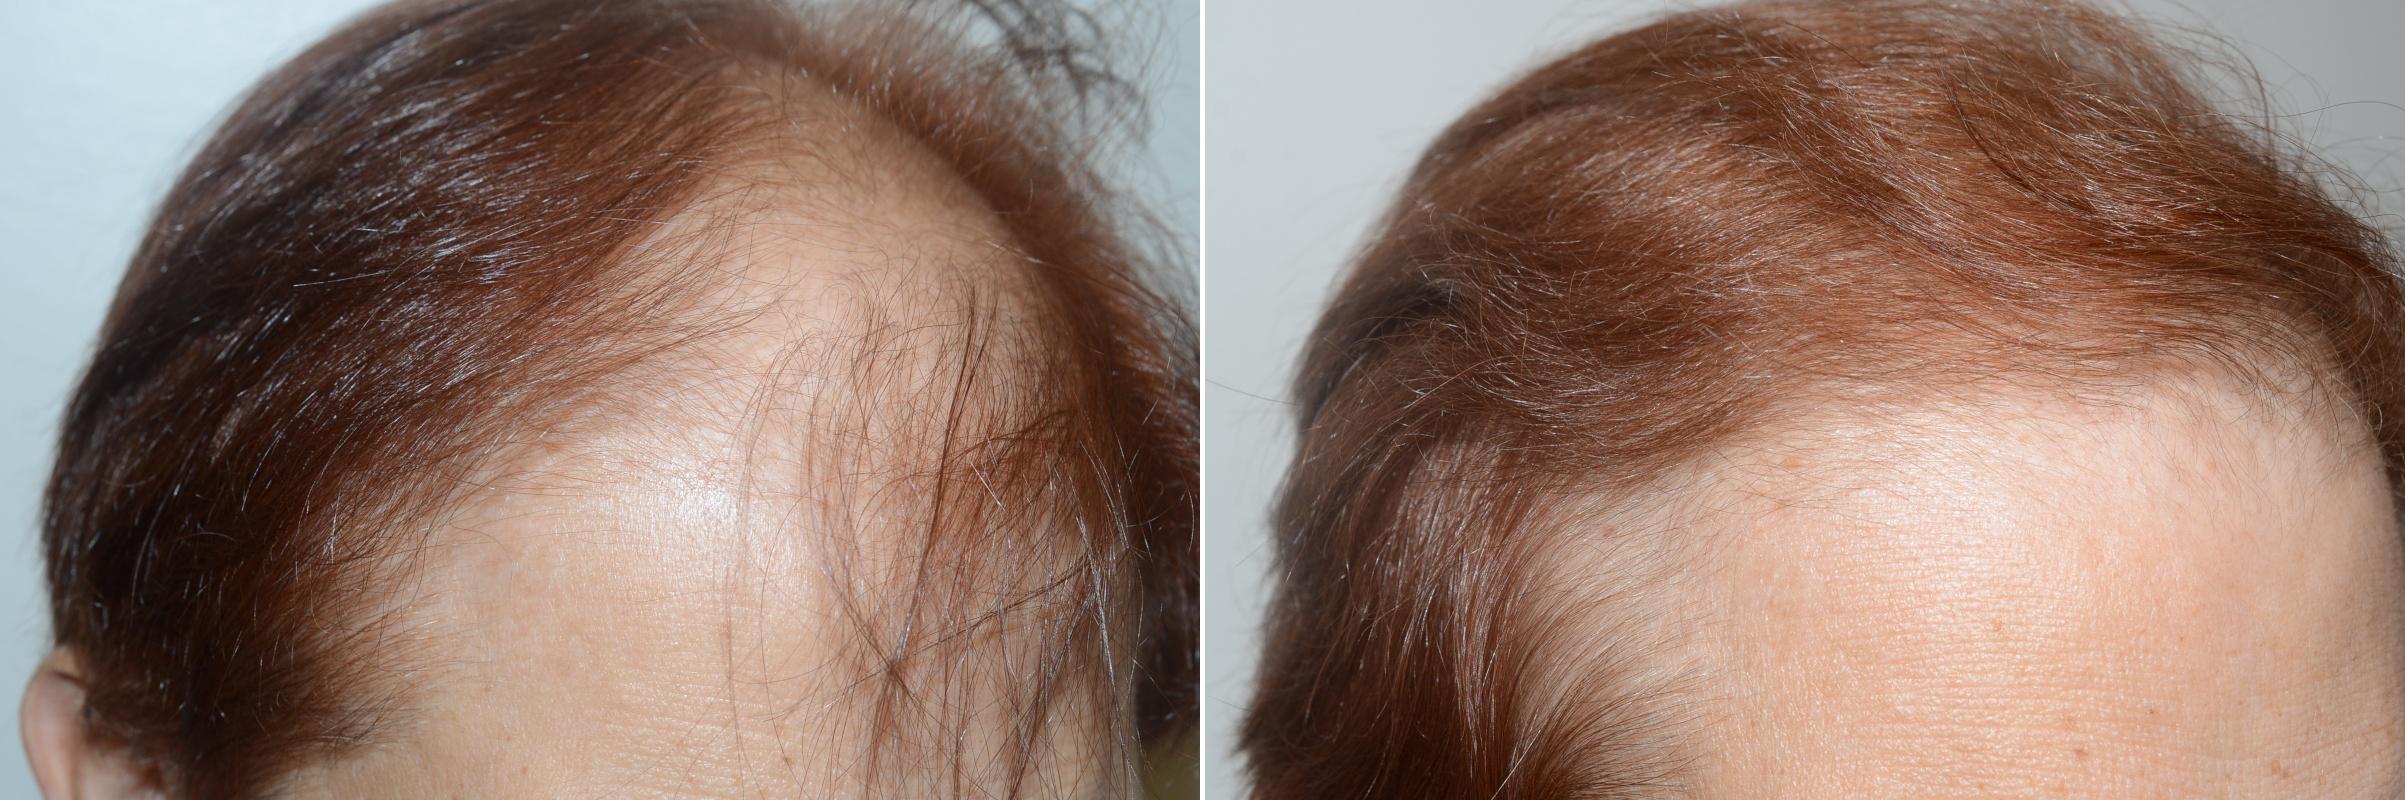 Hair Transplants For Women Photos Miami Fl Patient59153